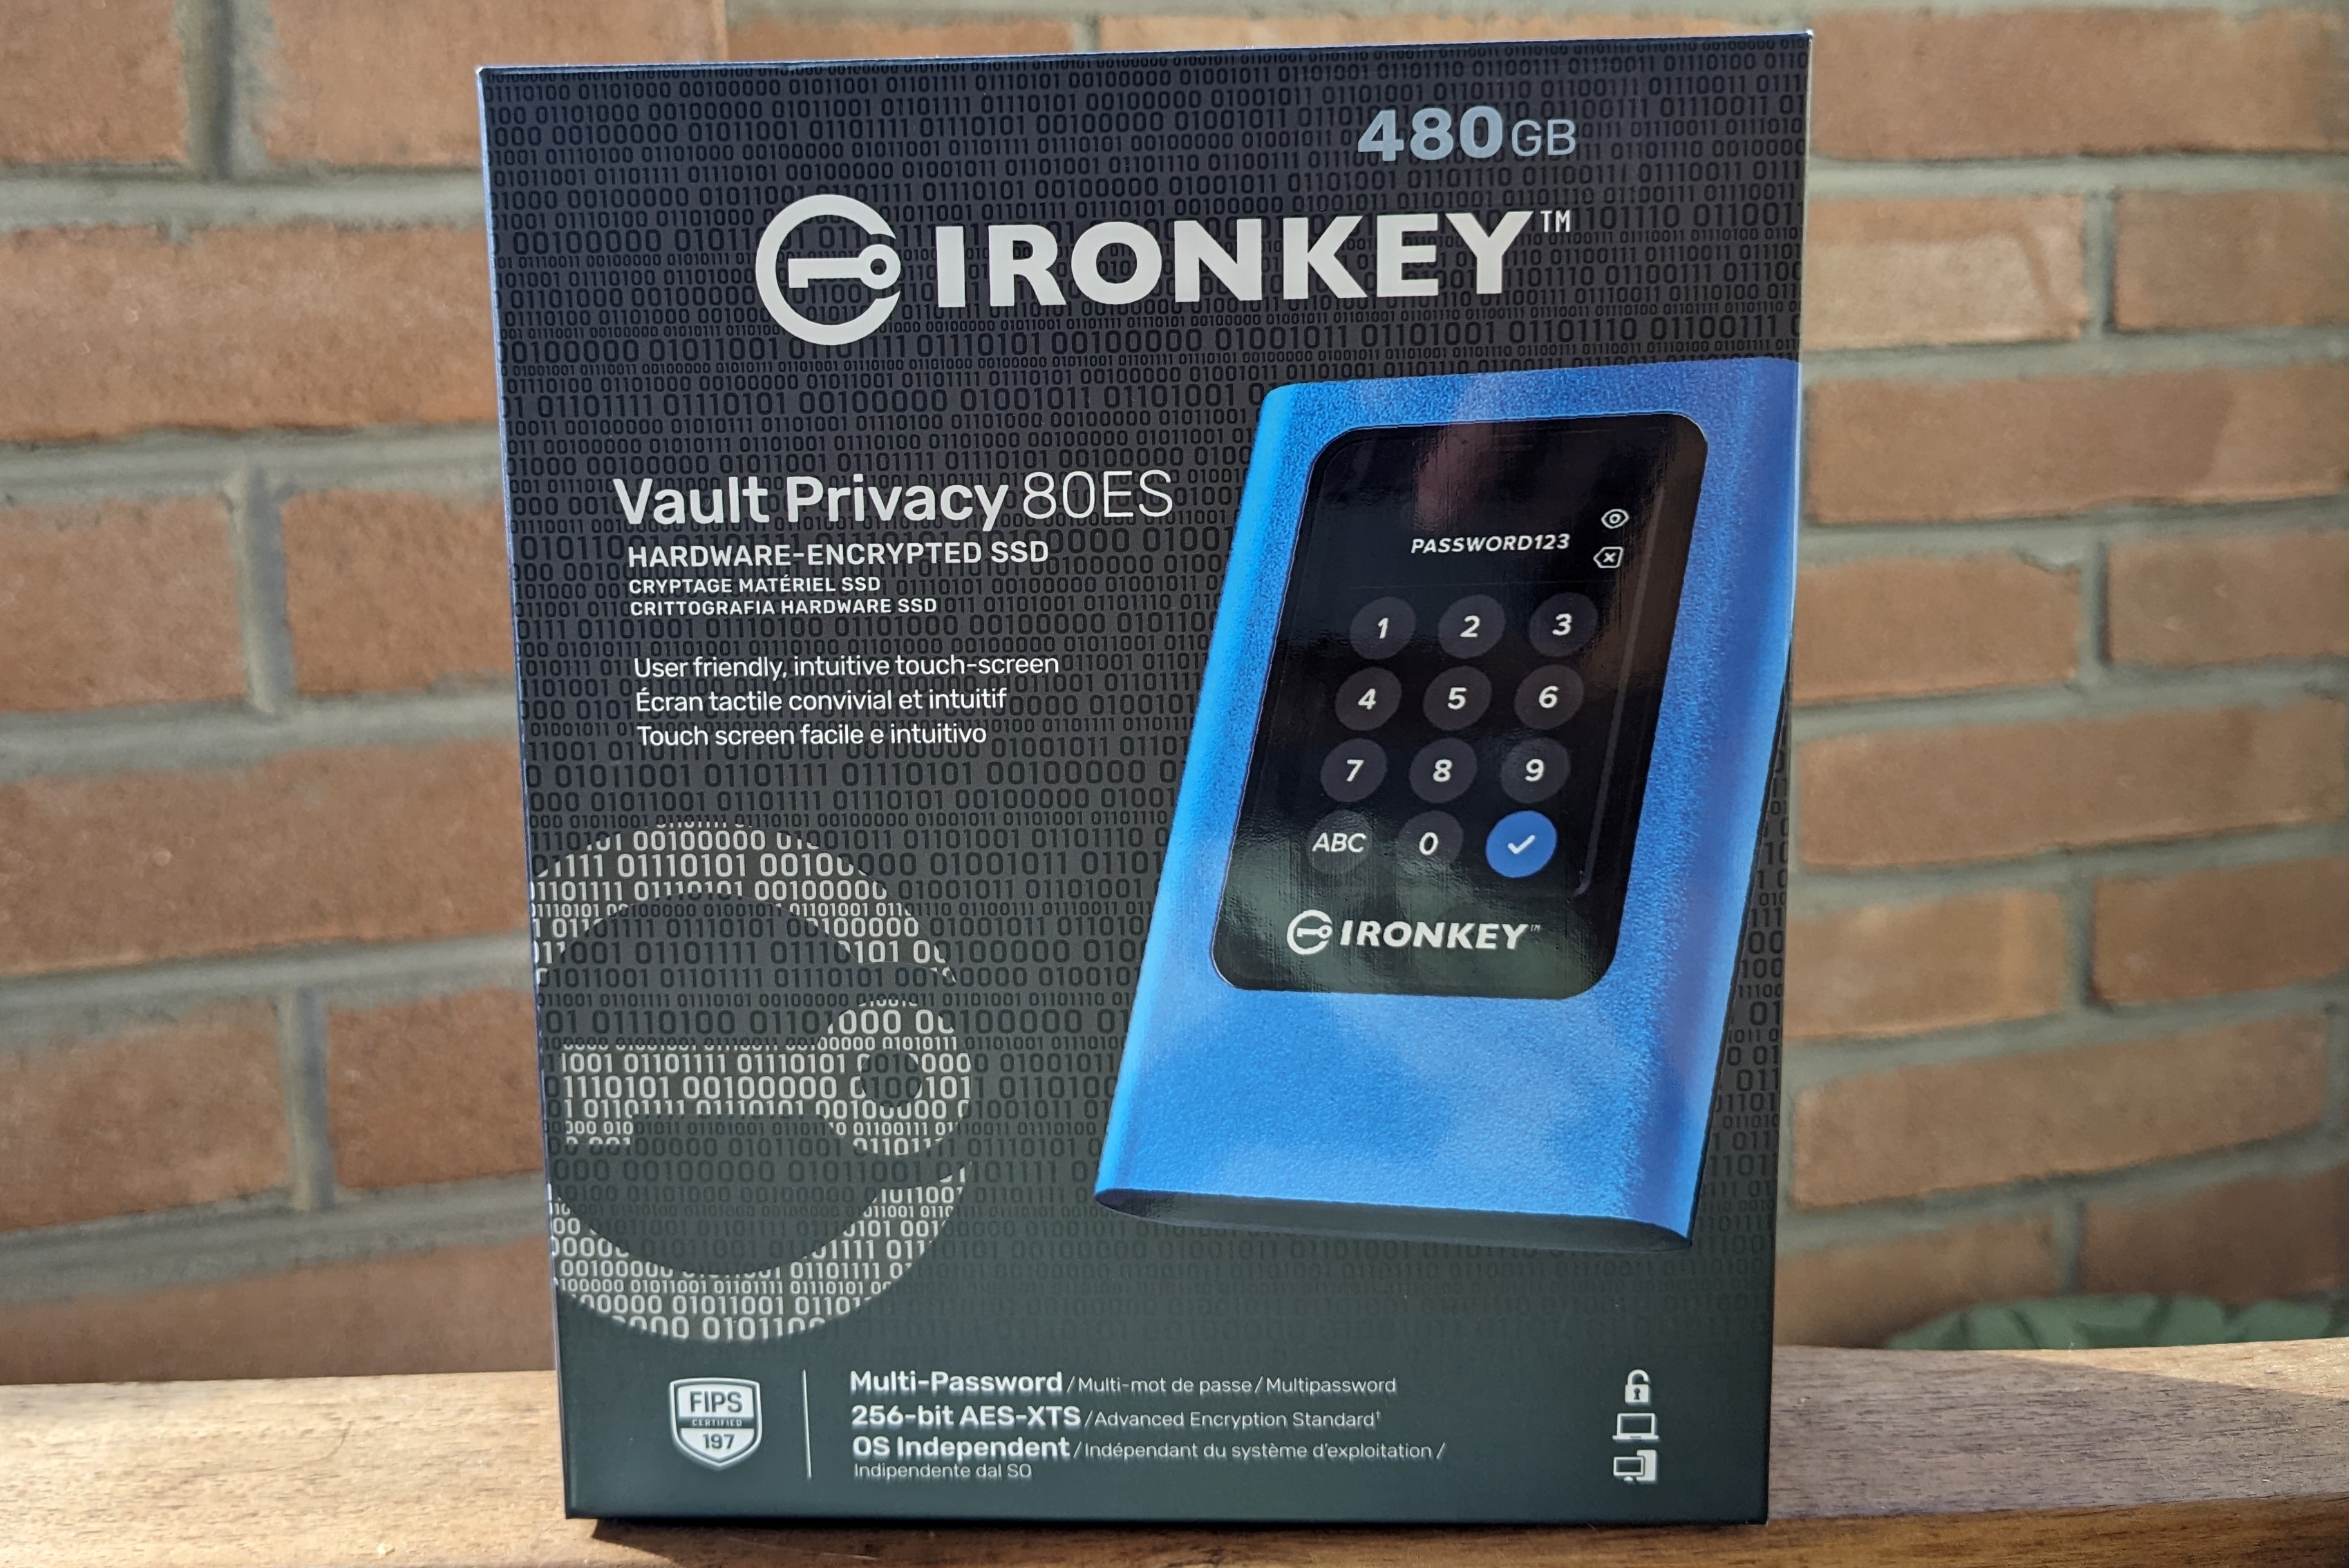 Kingston IronKey Vault Privacy 80